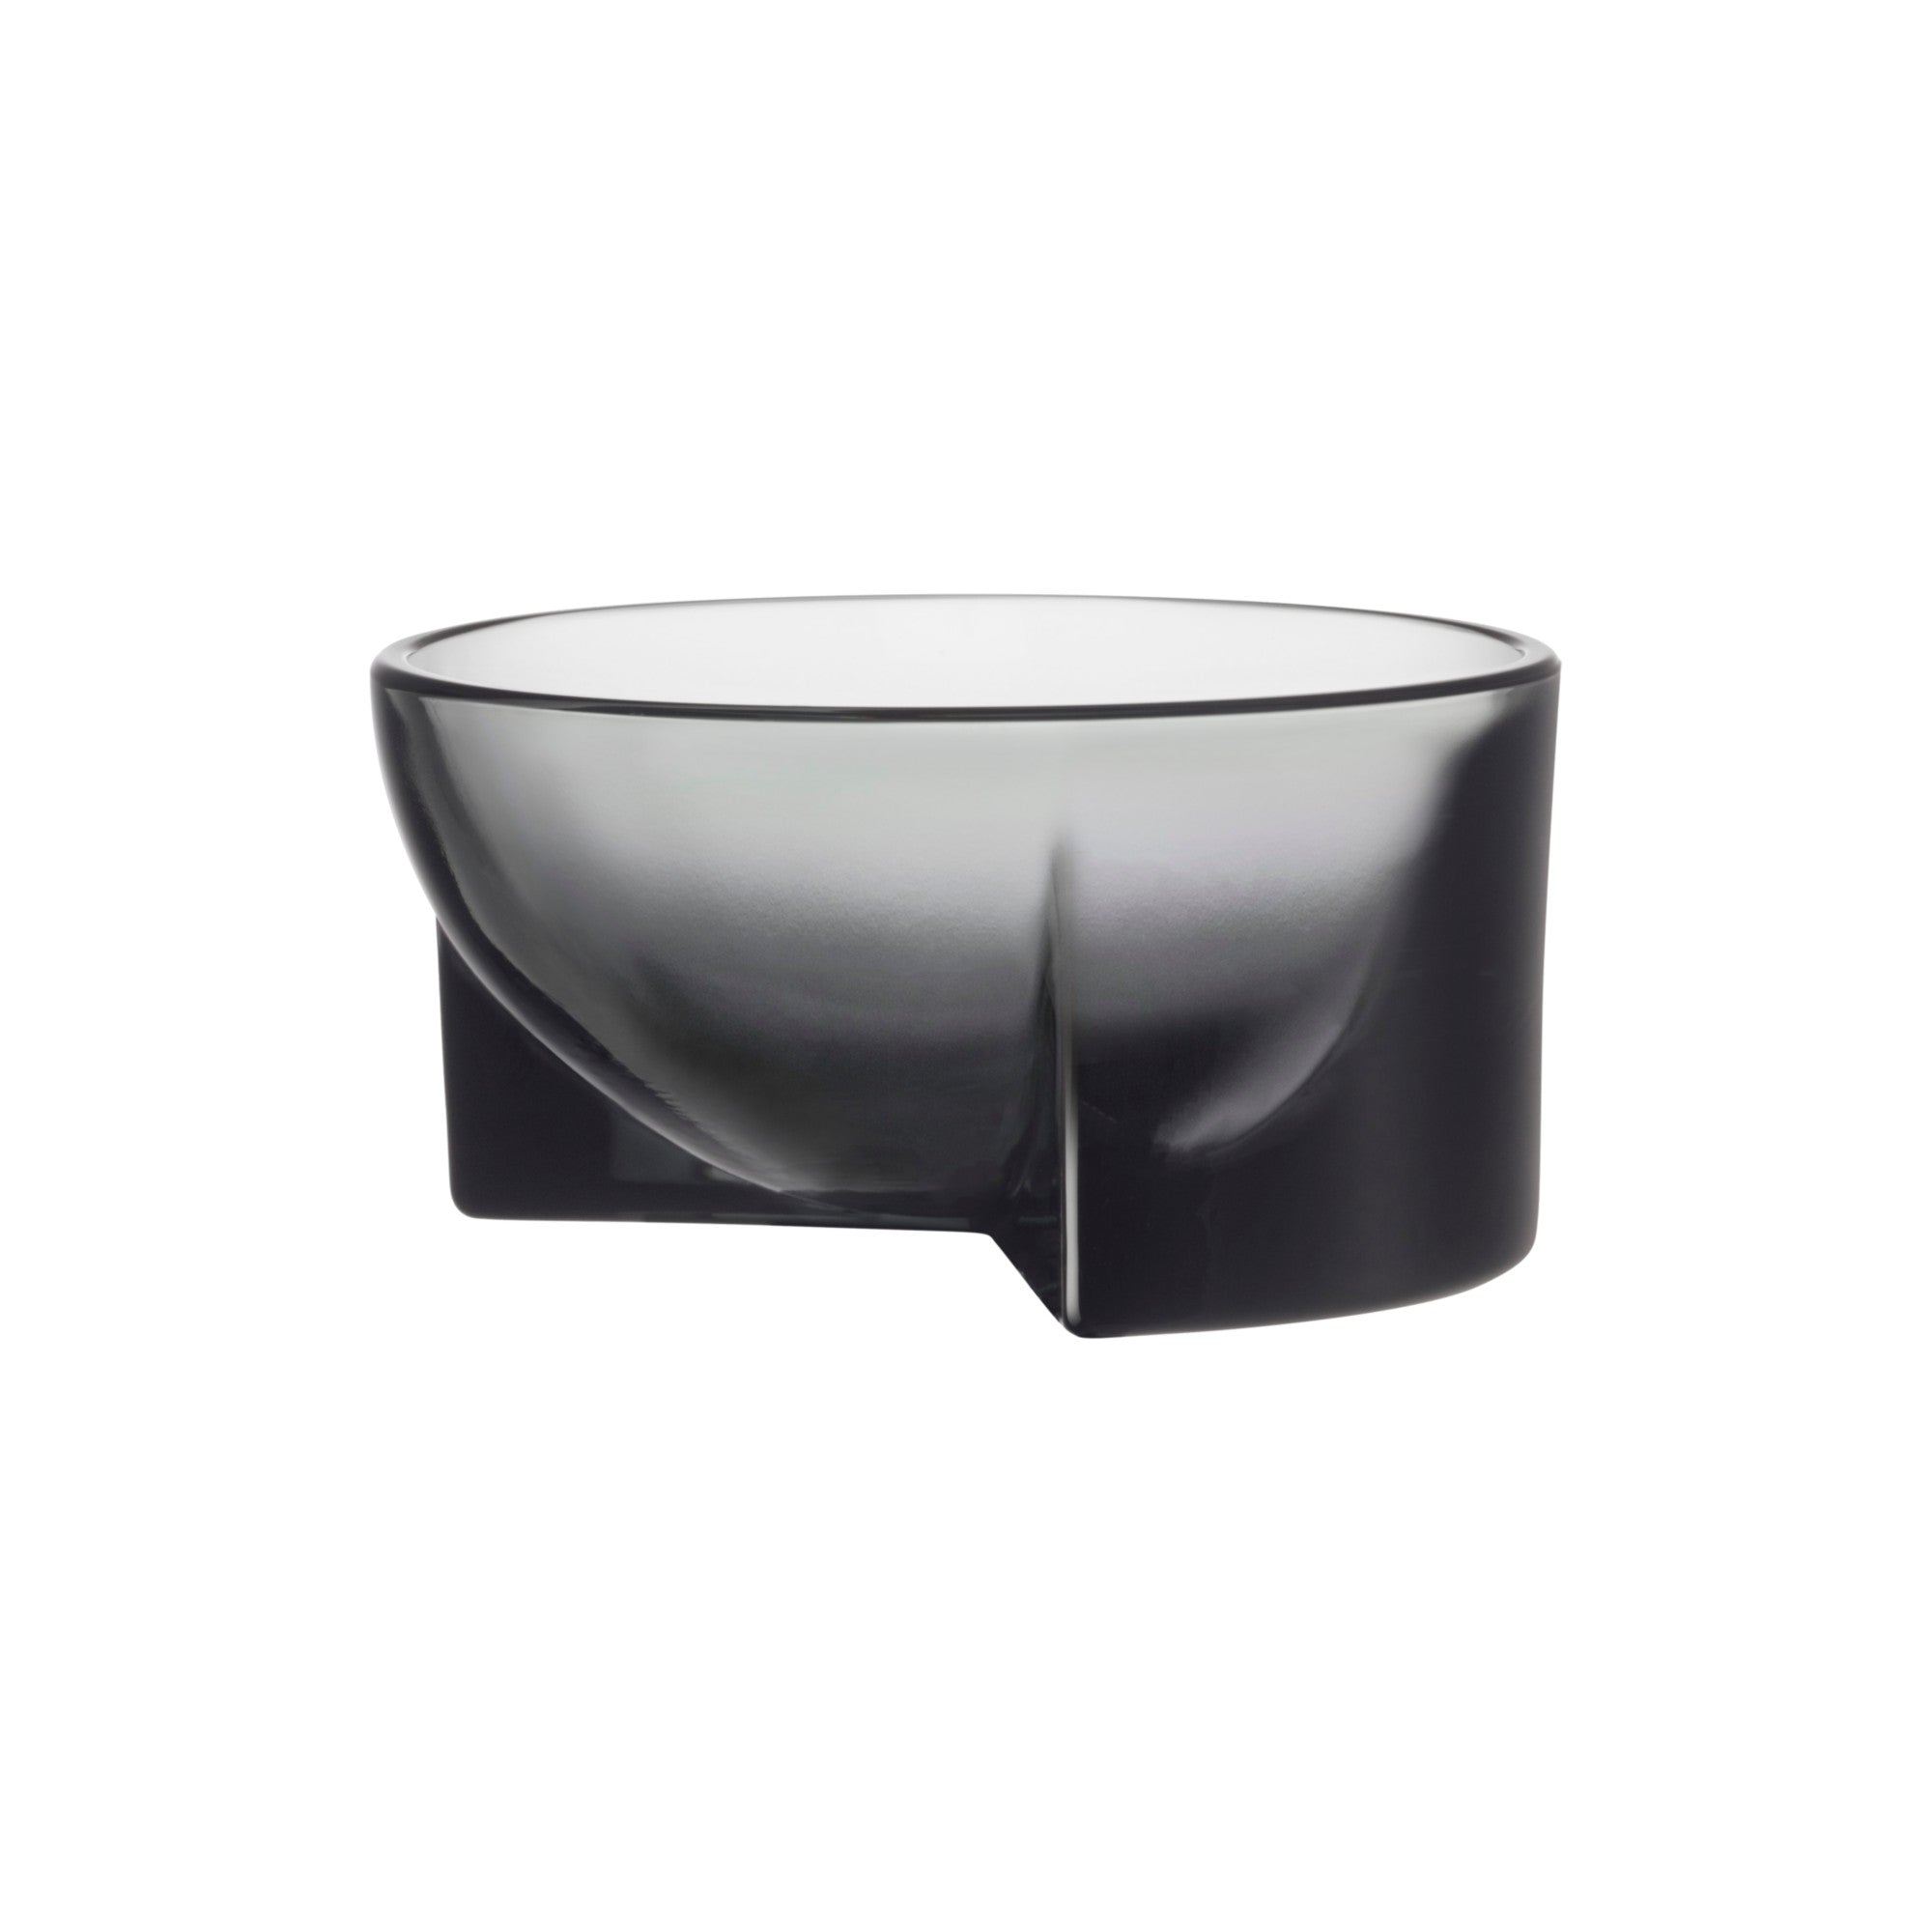 Kuru interior bowl 130 x 60 mm grey